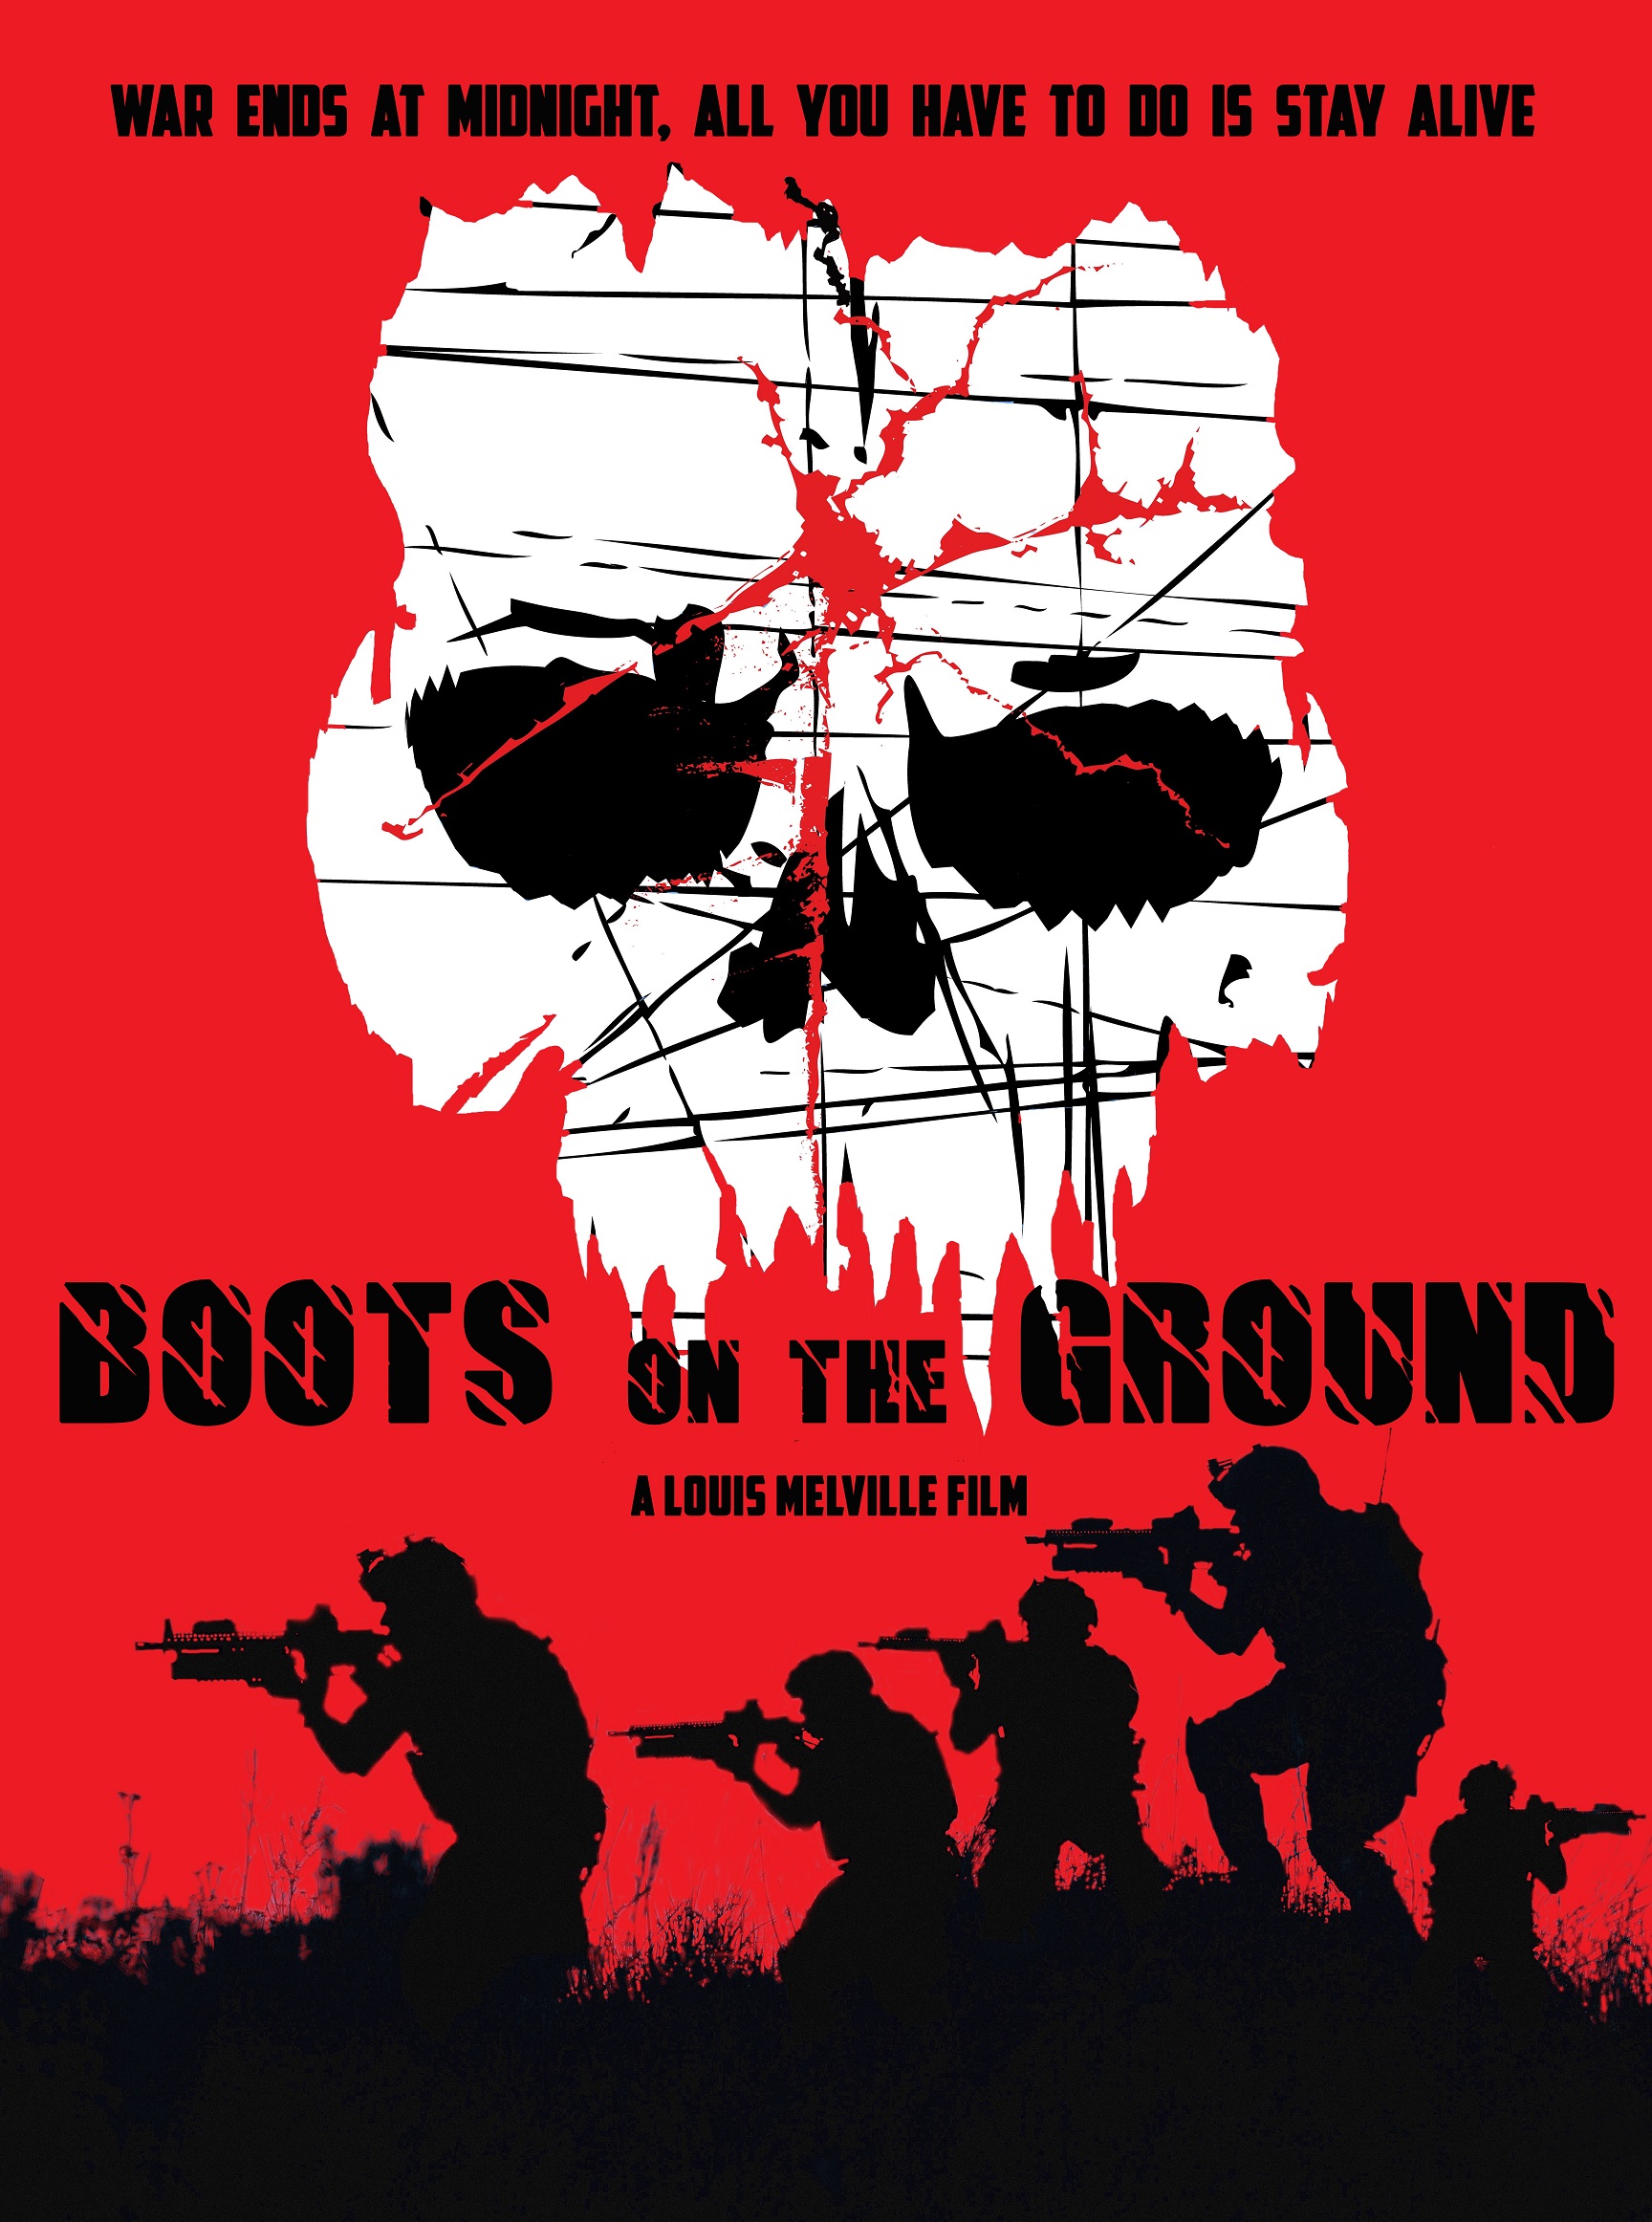 Nonton film Boots on the Ground layarkaca21 indoxx1 ganool online streaming terbaru